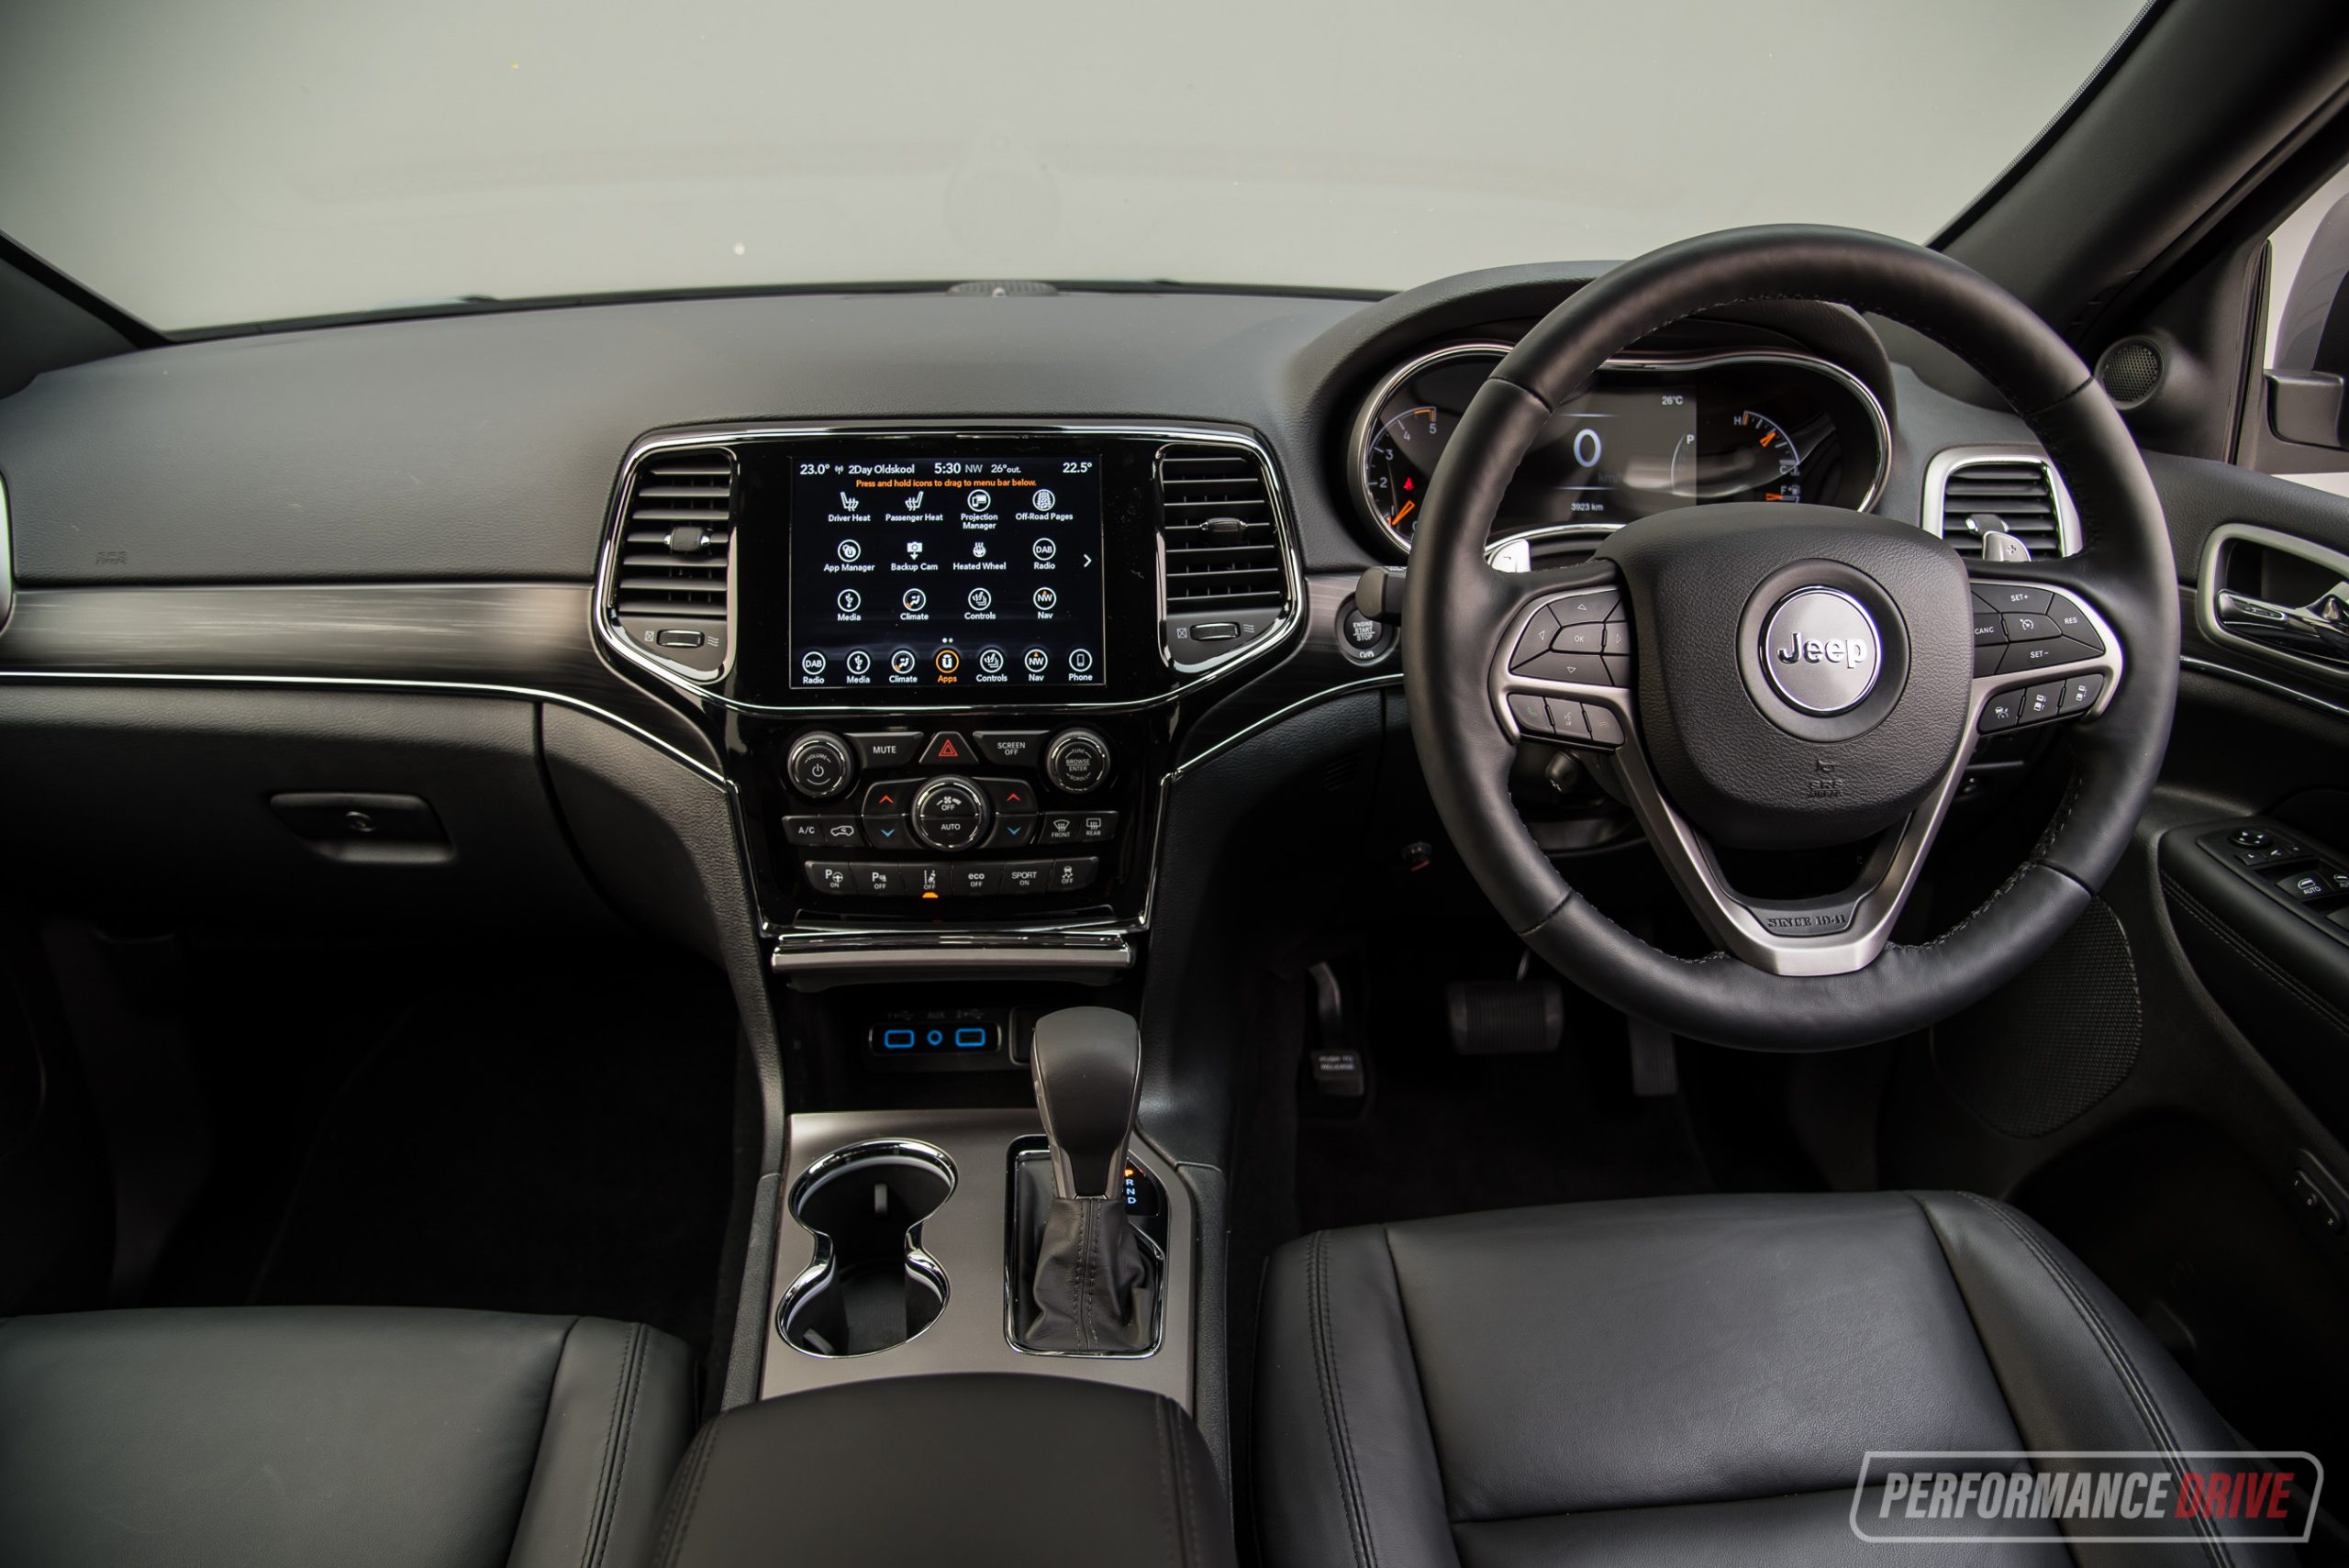 2020 Jeep Cherokee Interior Review: Still Fresh